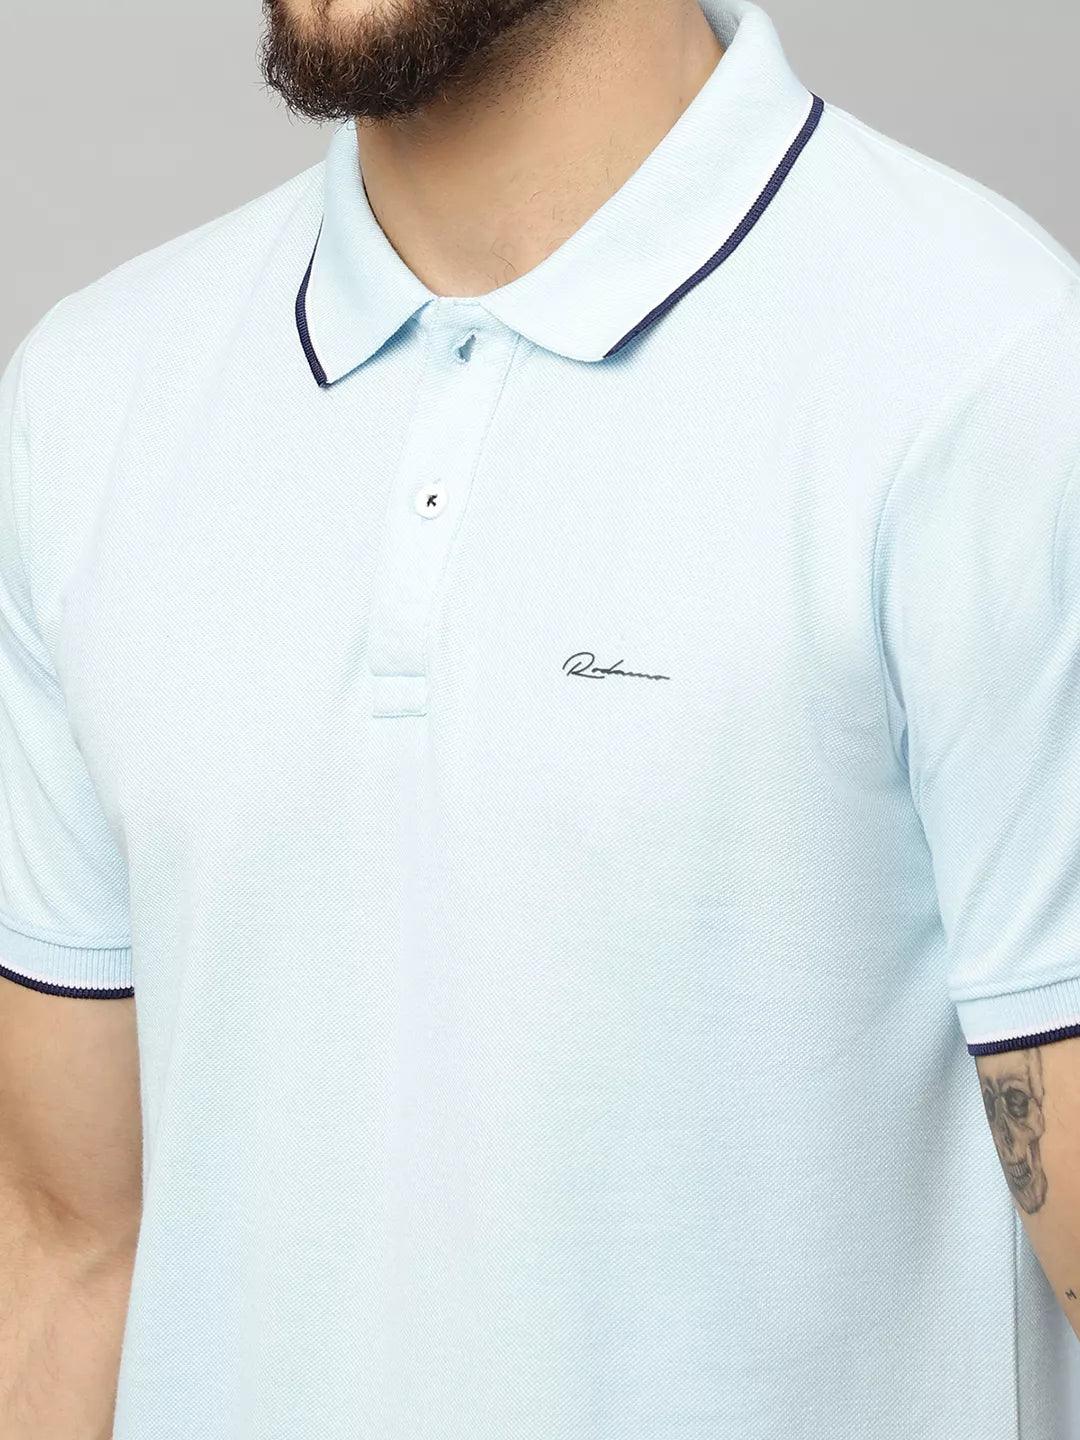 Rodamo Polo T-Shirts (Large) (112060105) - ShopIMO